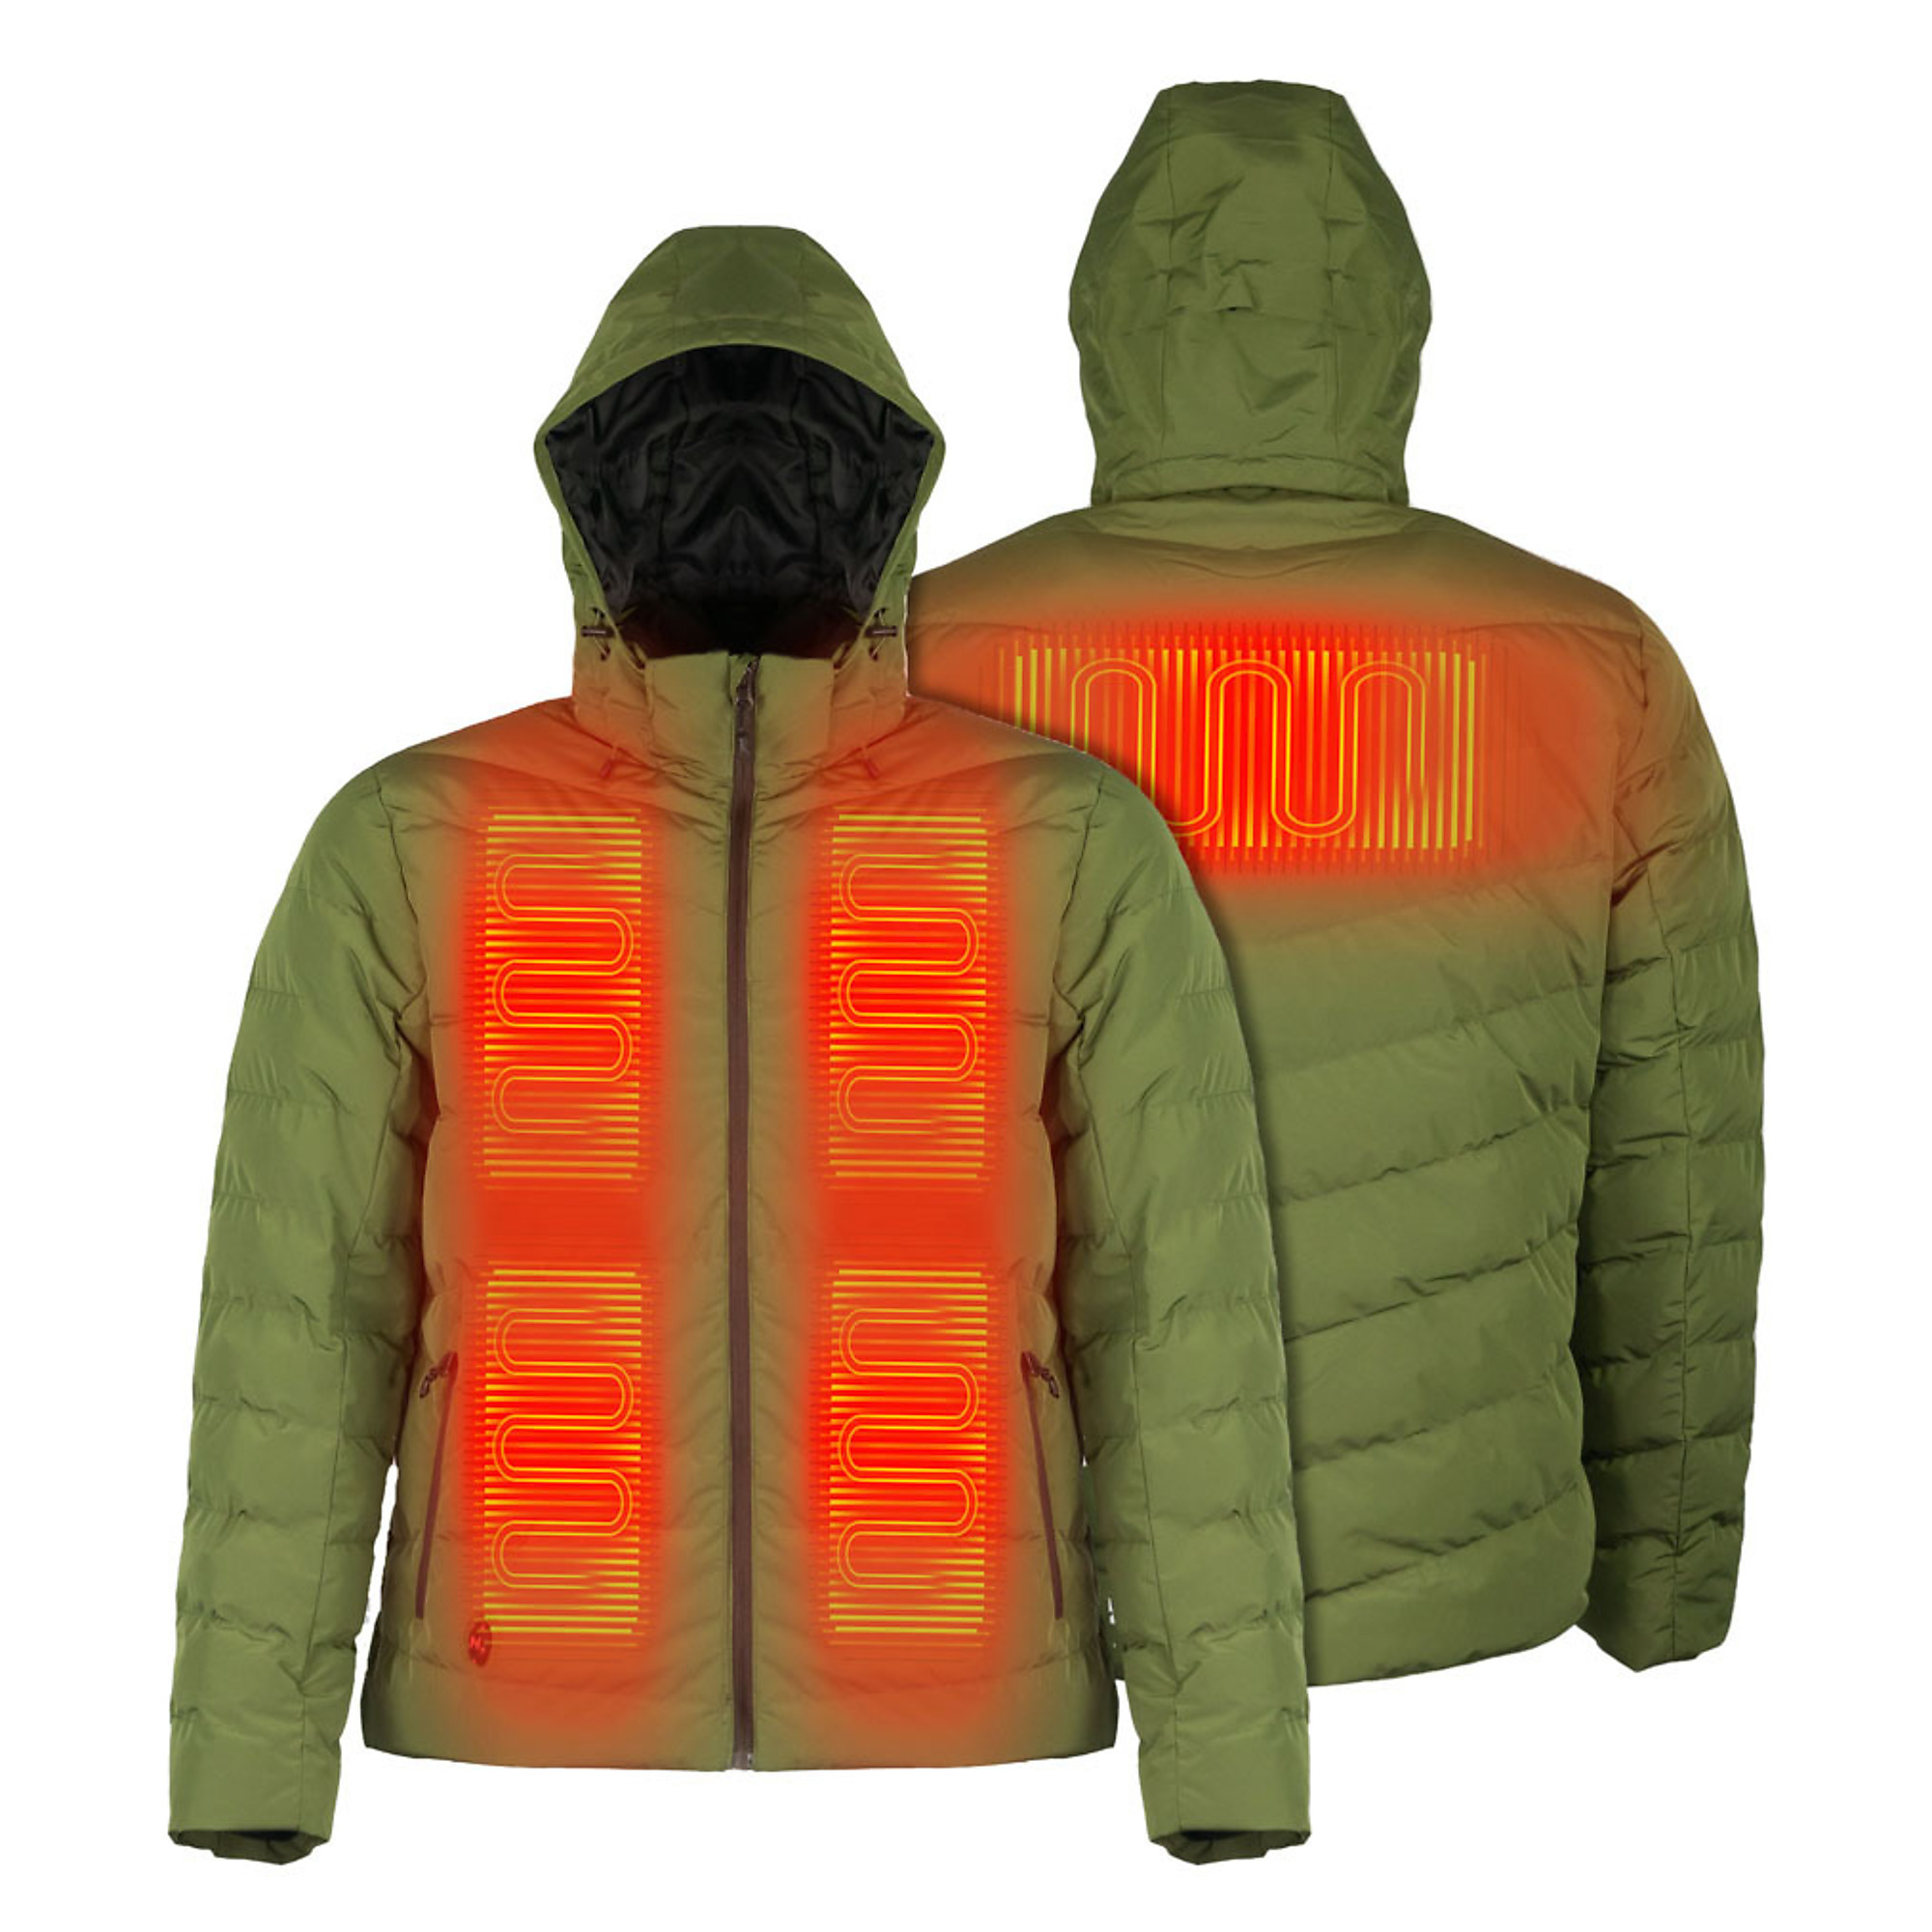 Fieldsheer, Men's Crest Heated Jacket with 7.4v Battery, Size 3XL, Color Olive Green, Model MWMJ37110722